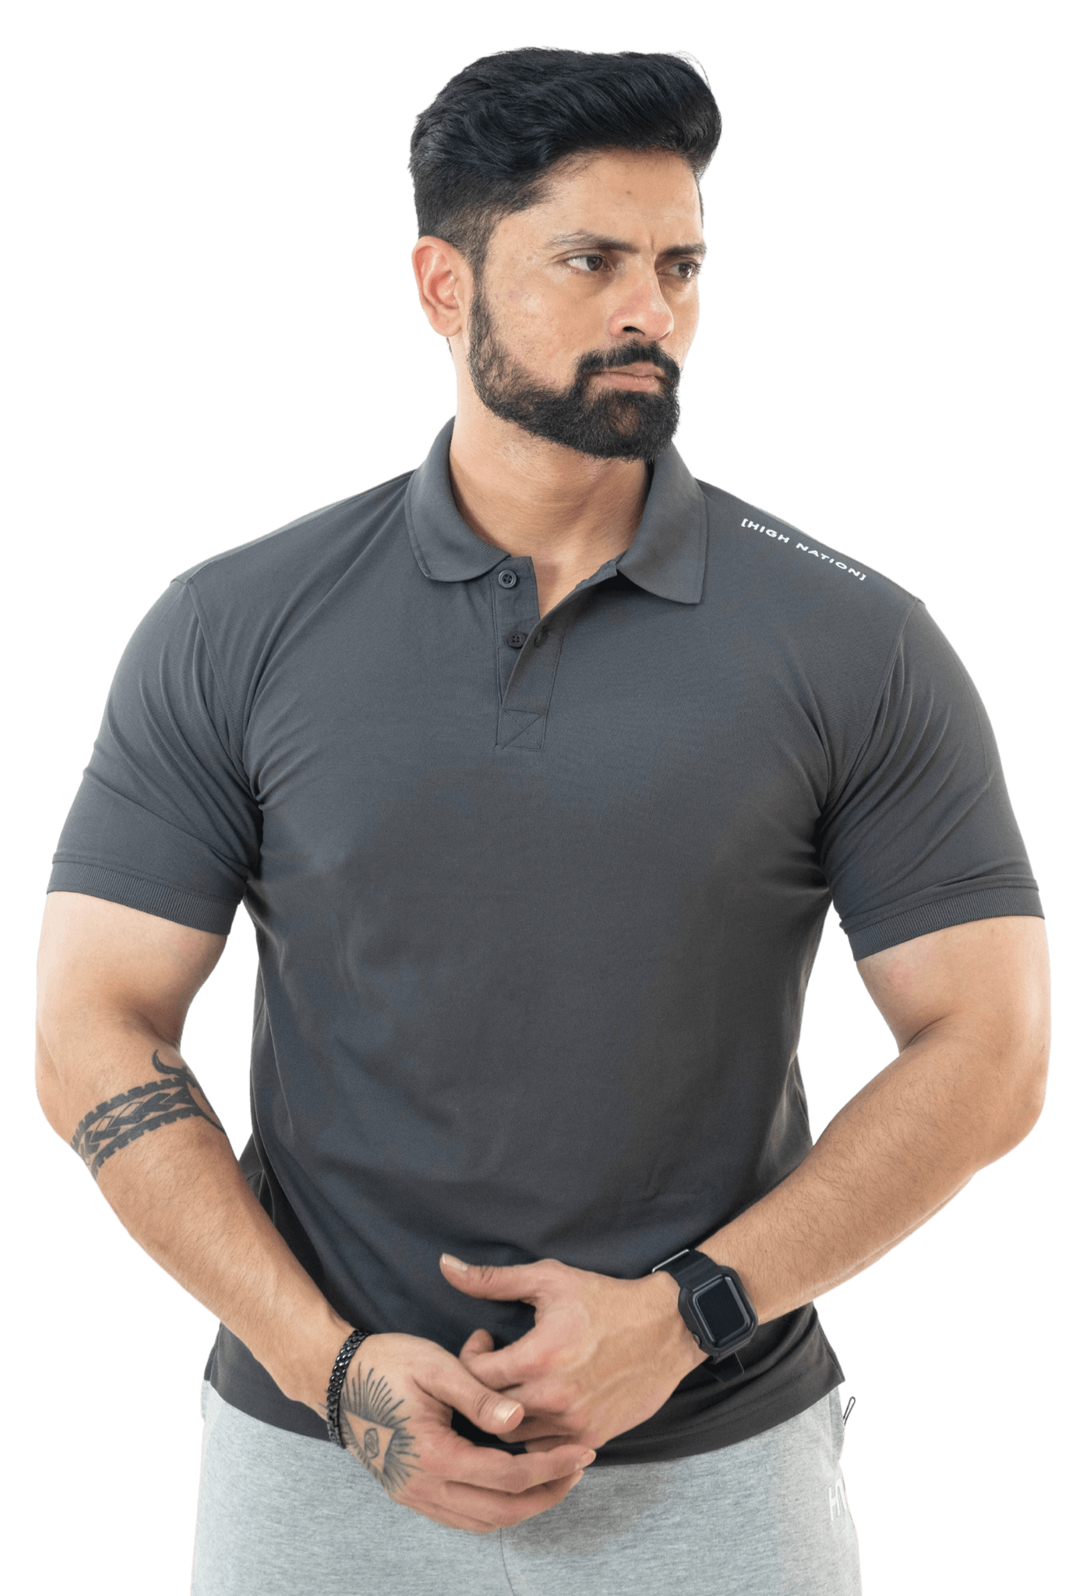 Charcoal Grey polo t shirt for men - HNAthleisure